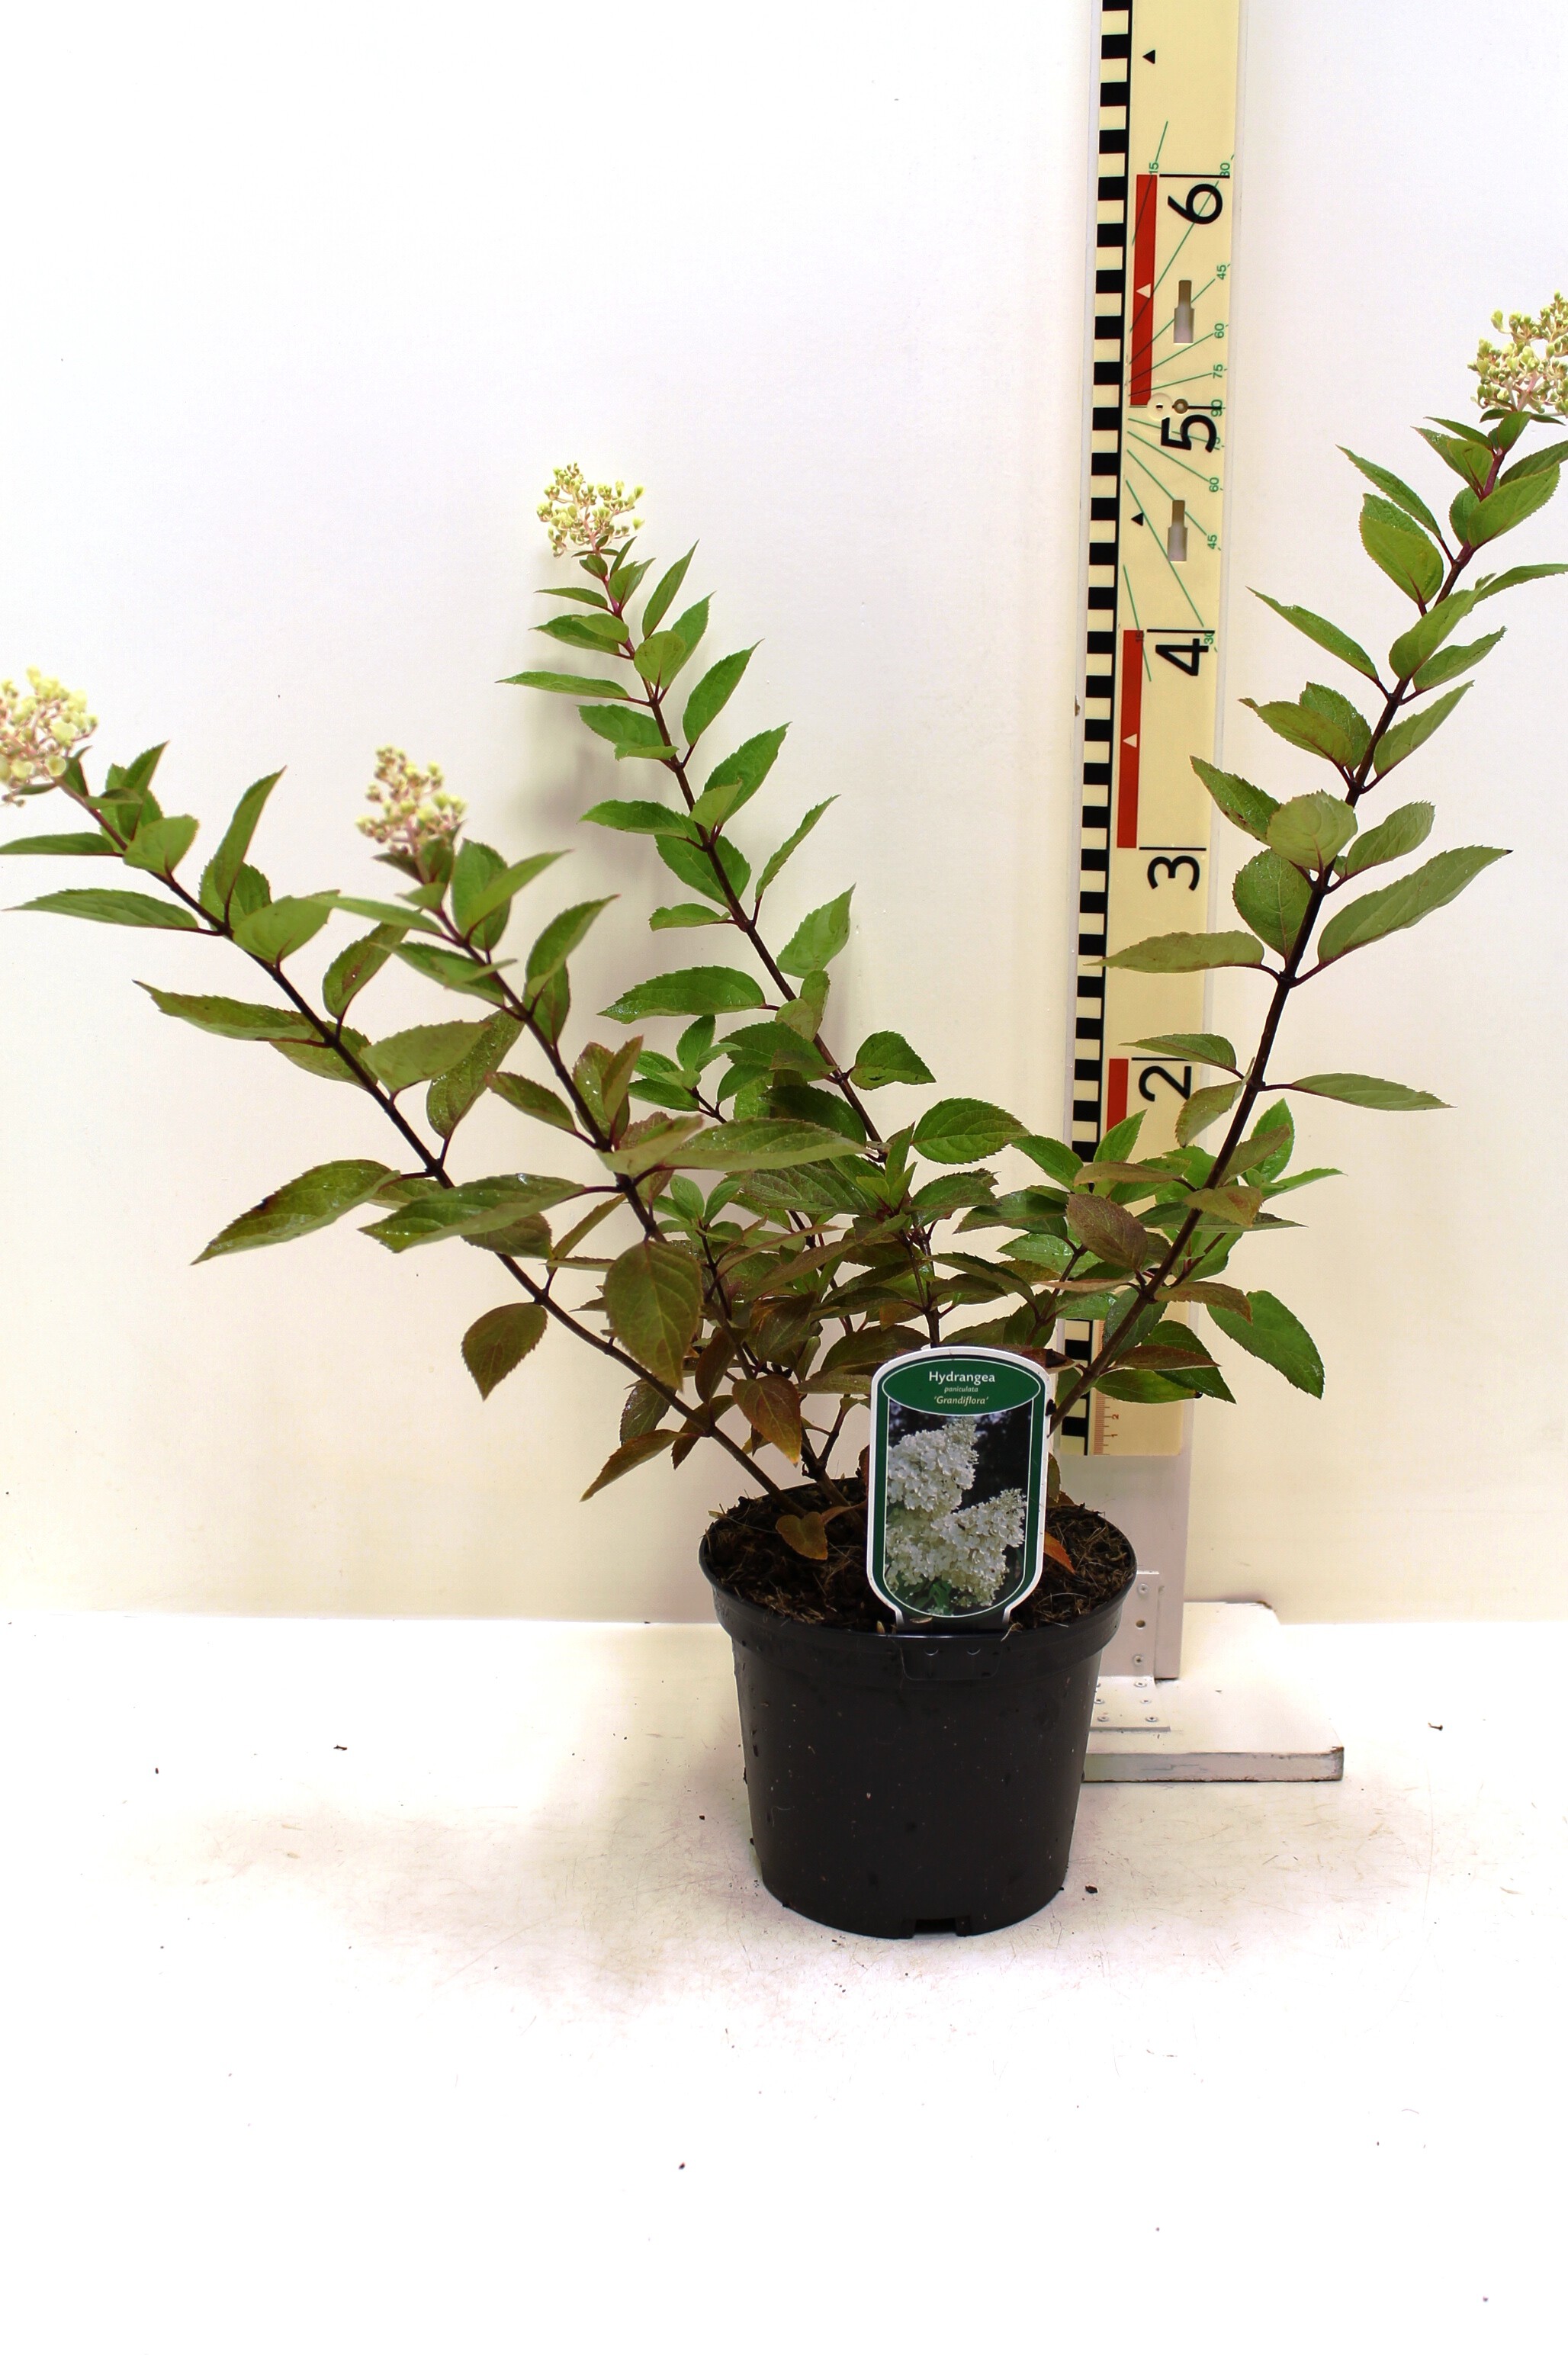 Hydrangea paniculata 'Grandiflora' c3